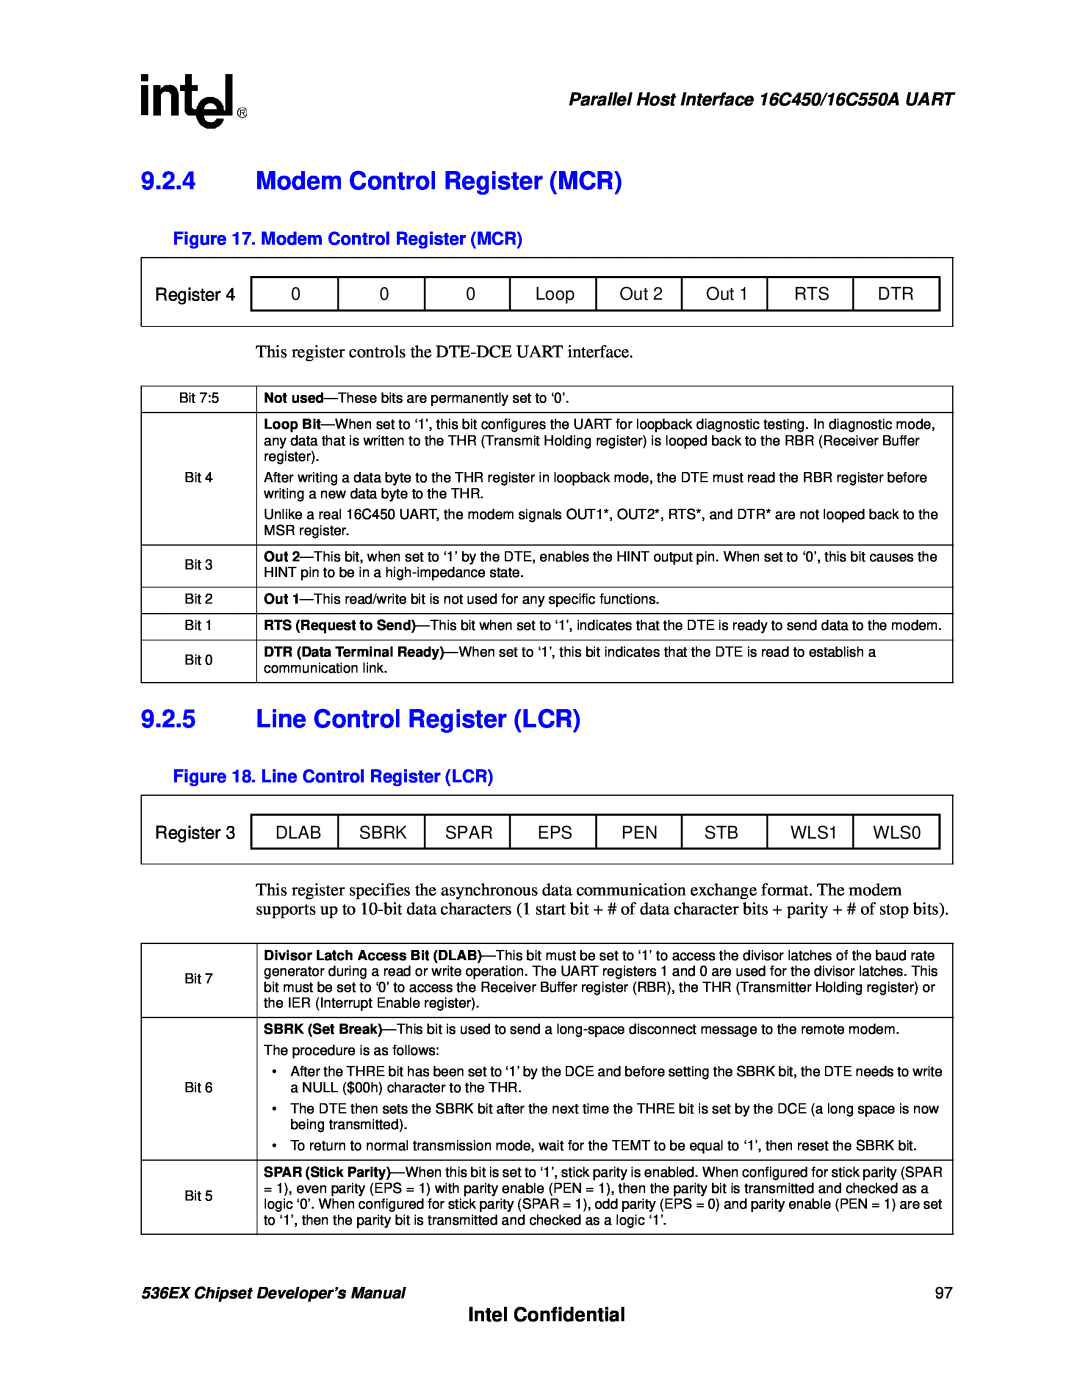 Intel 536EX manual 9.2.4Modem Control Register MCR, 9.2.5Line Control Register LCR, Intel Confidential 